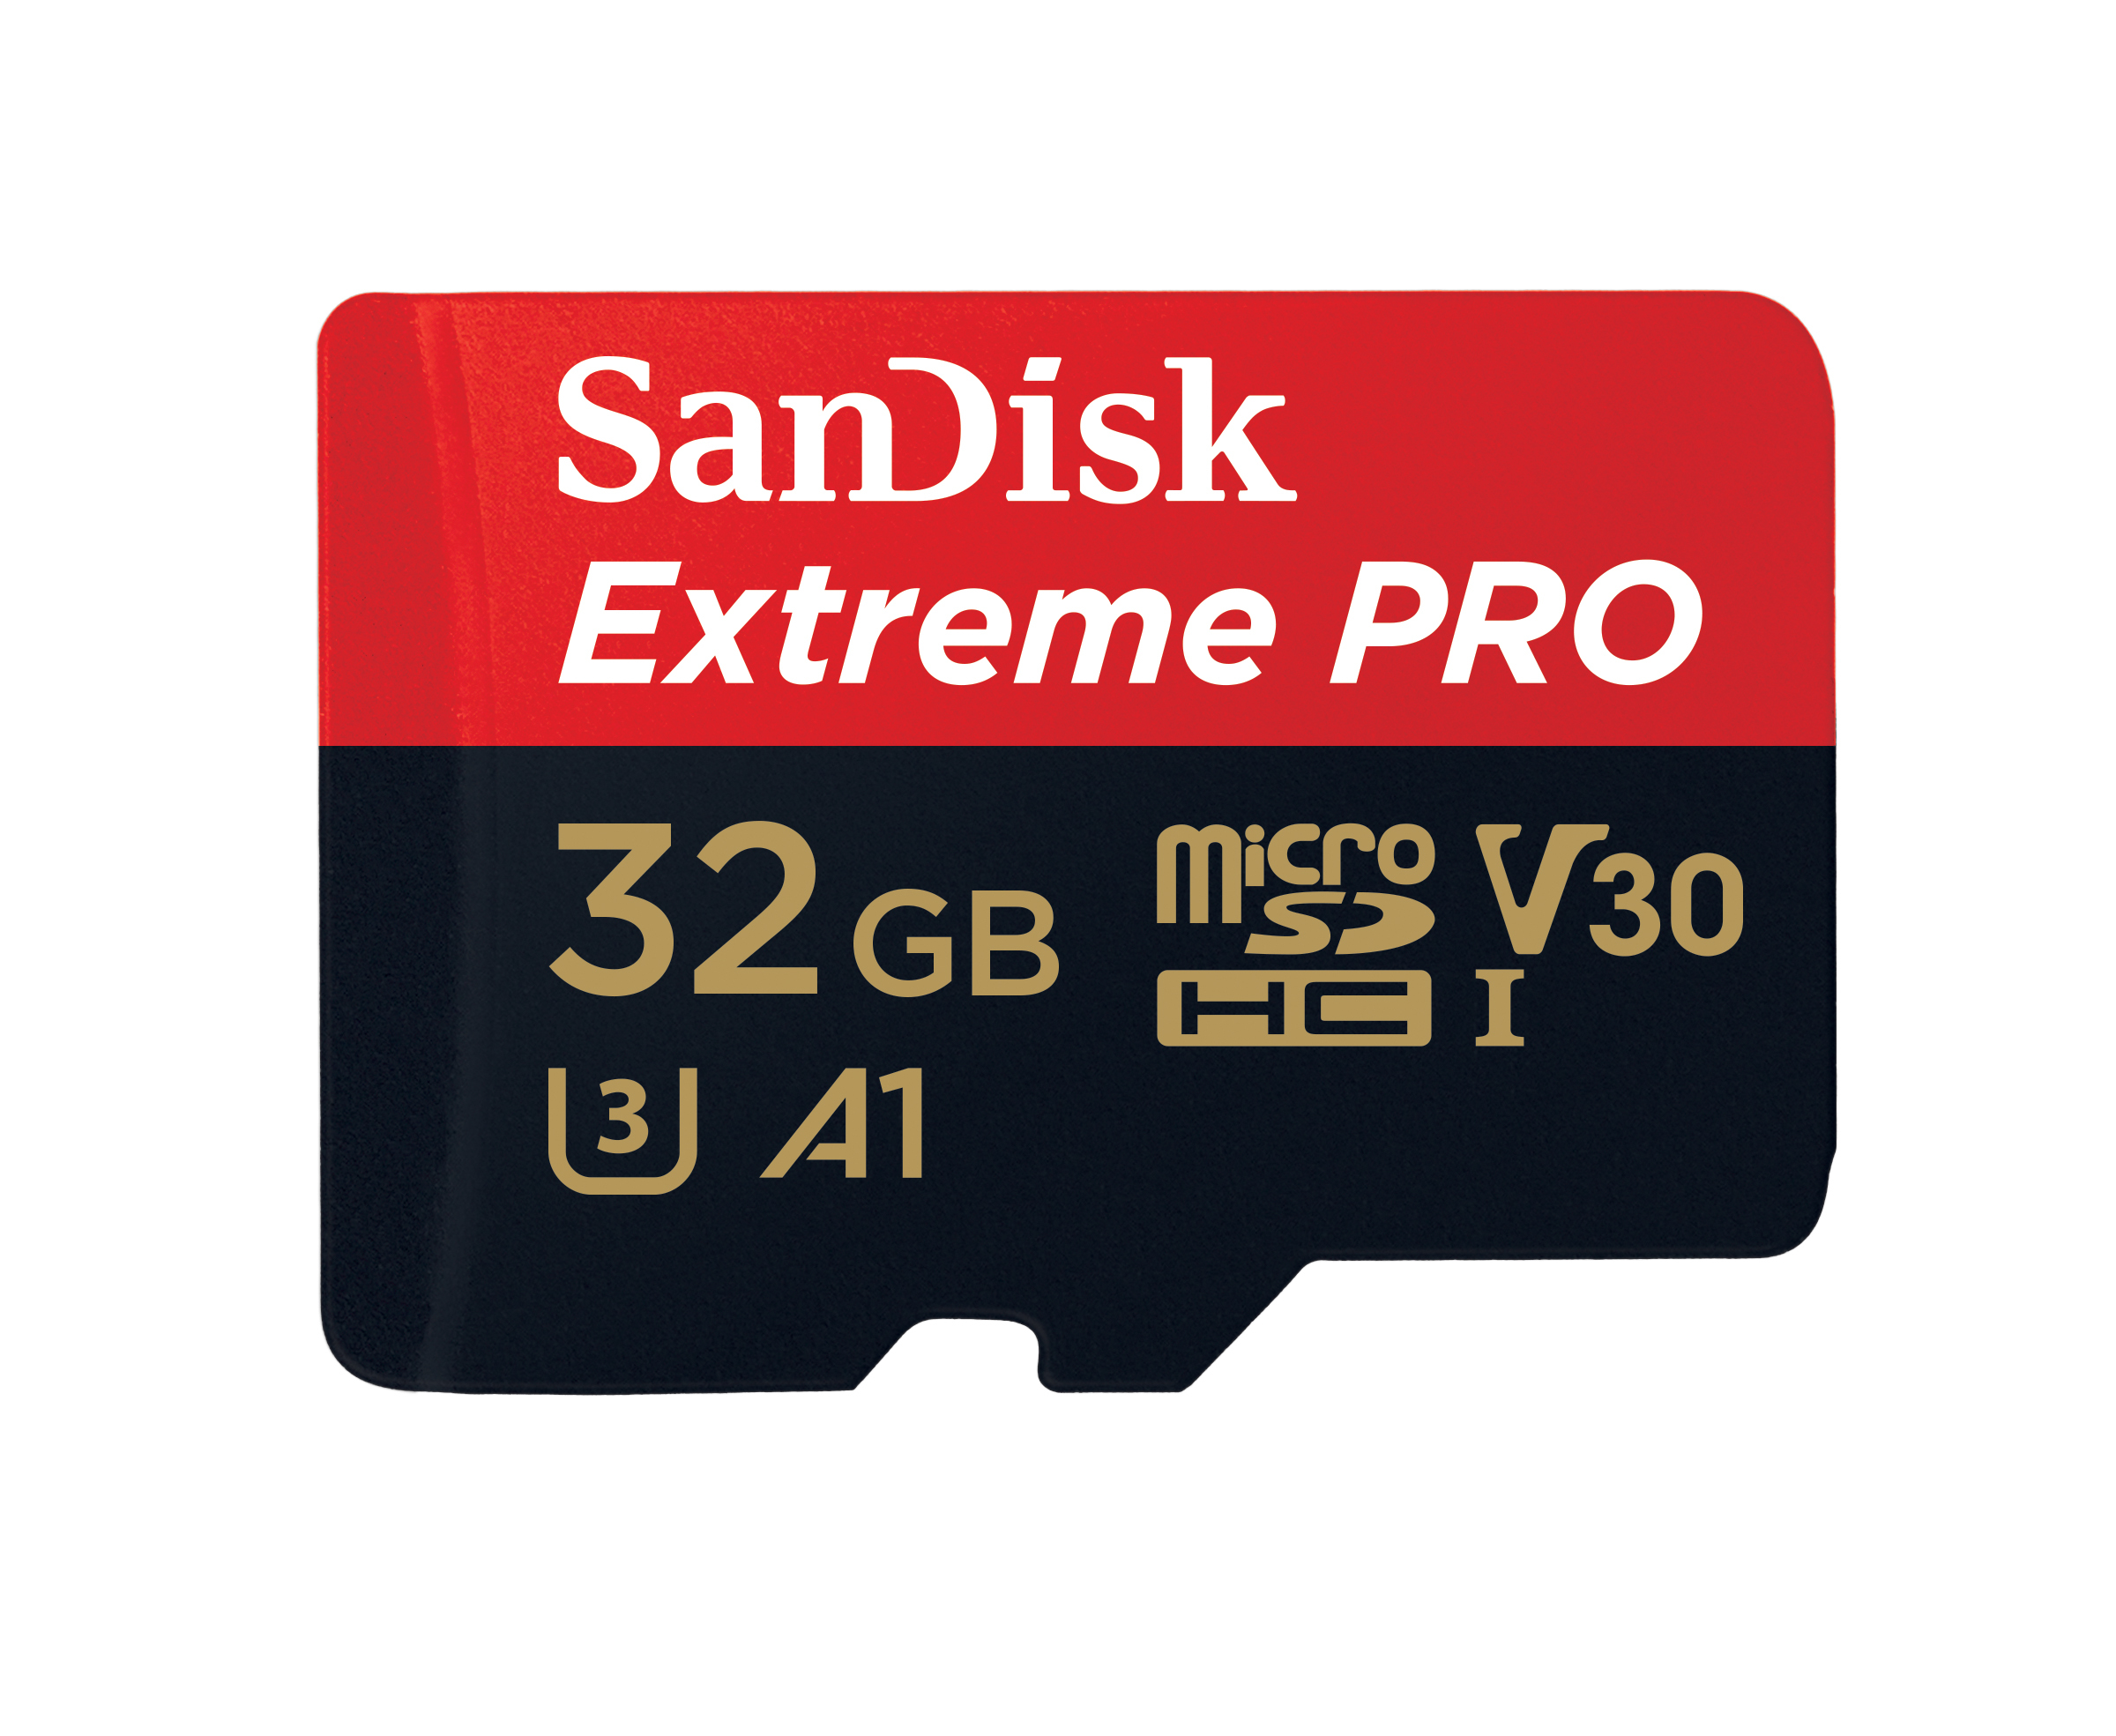 SanDisk Extreme Pro 32GB MicroSDHC Memory Card